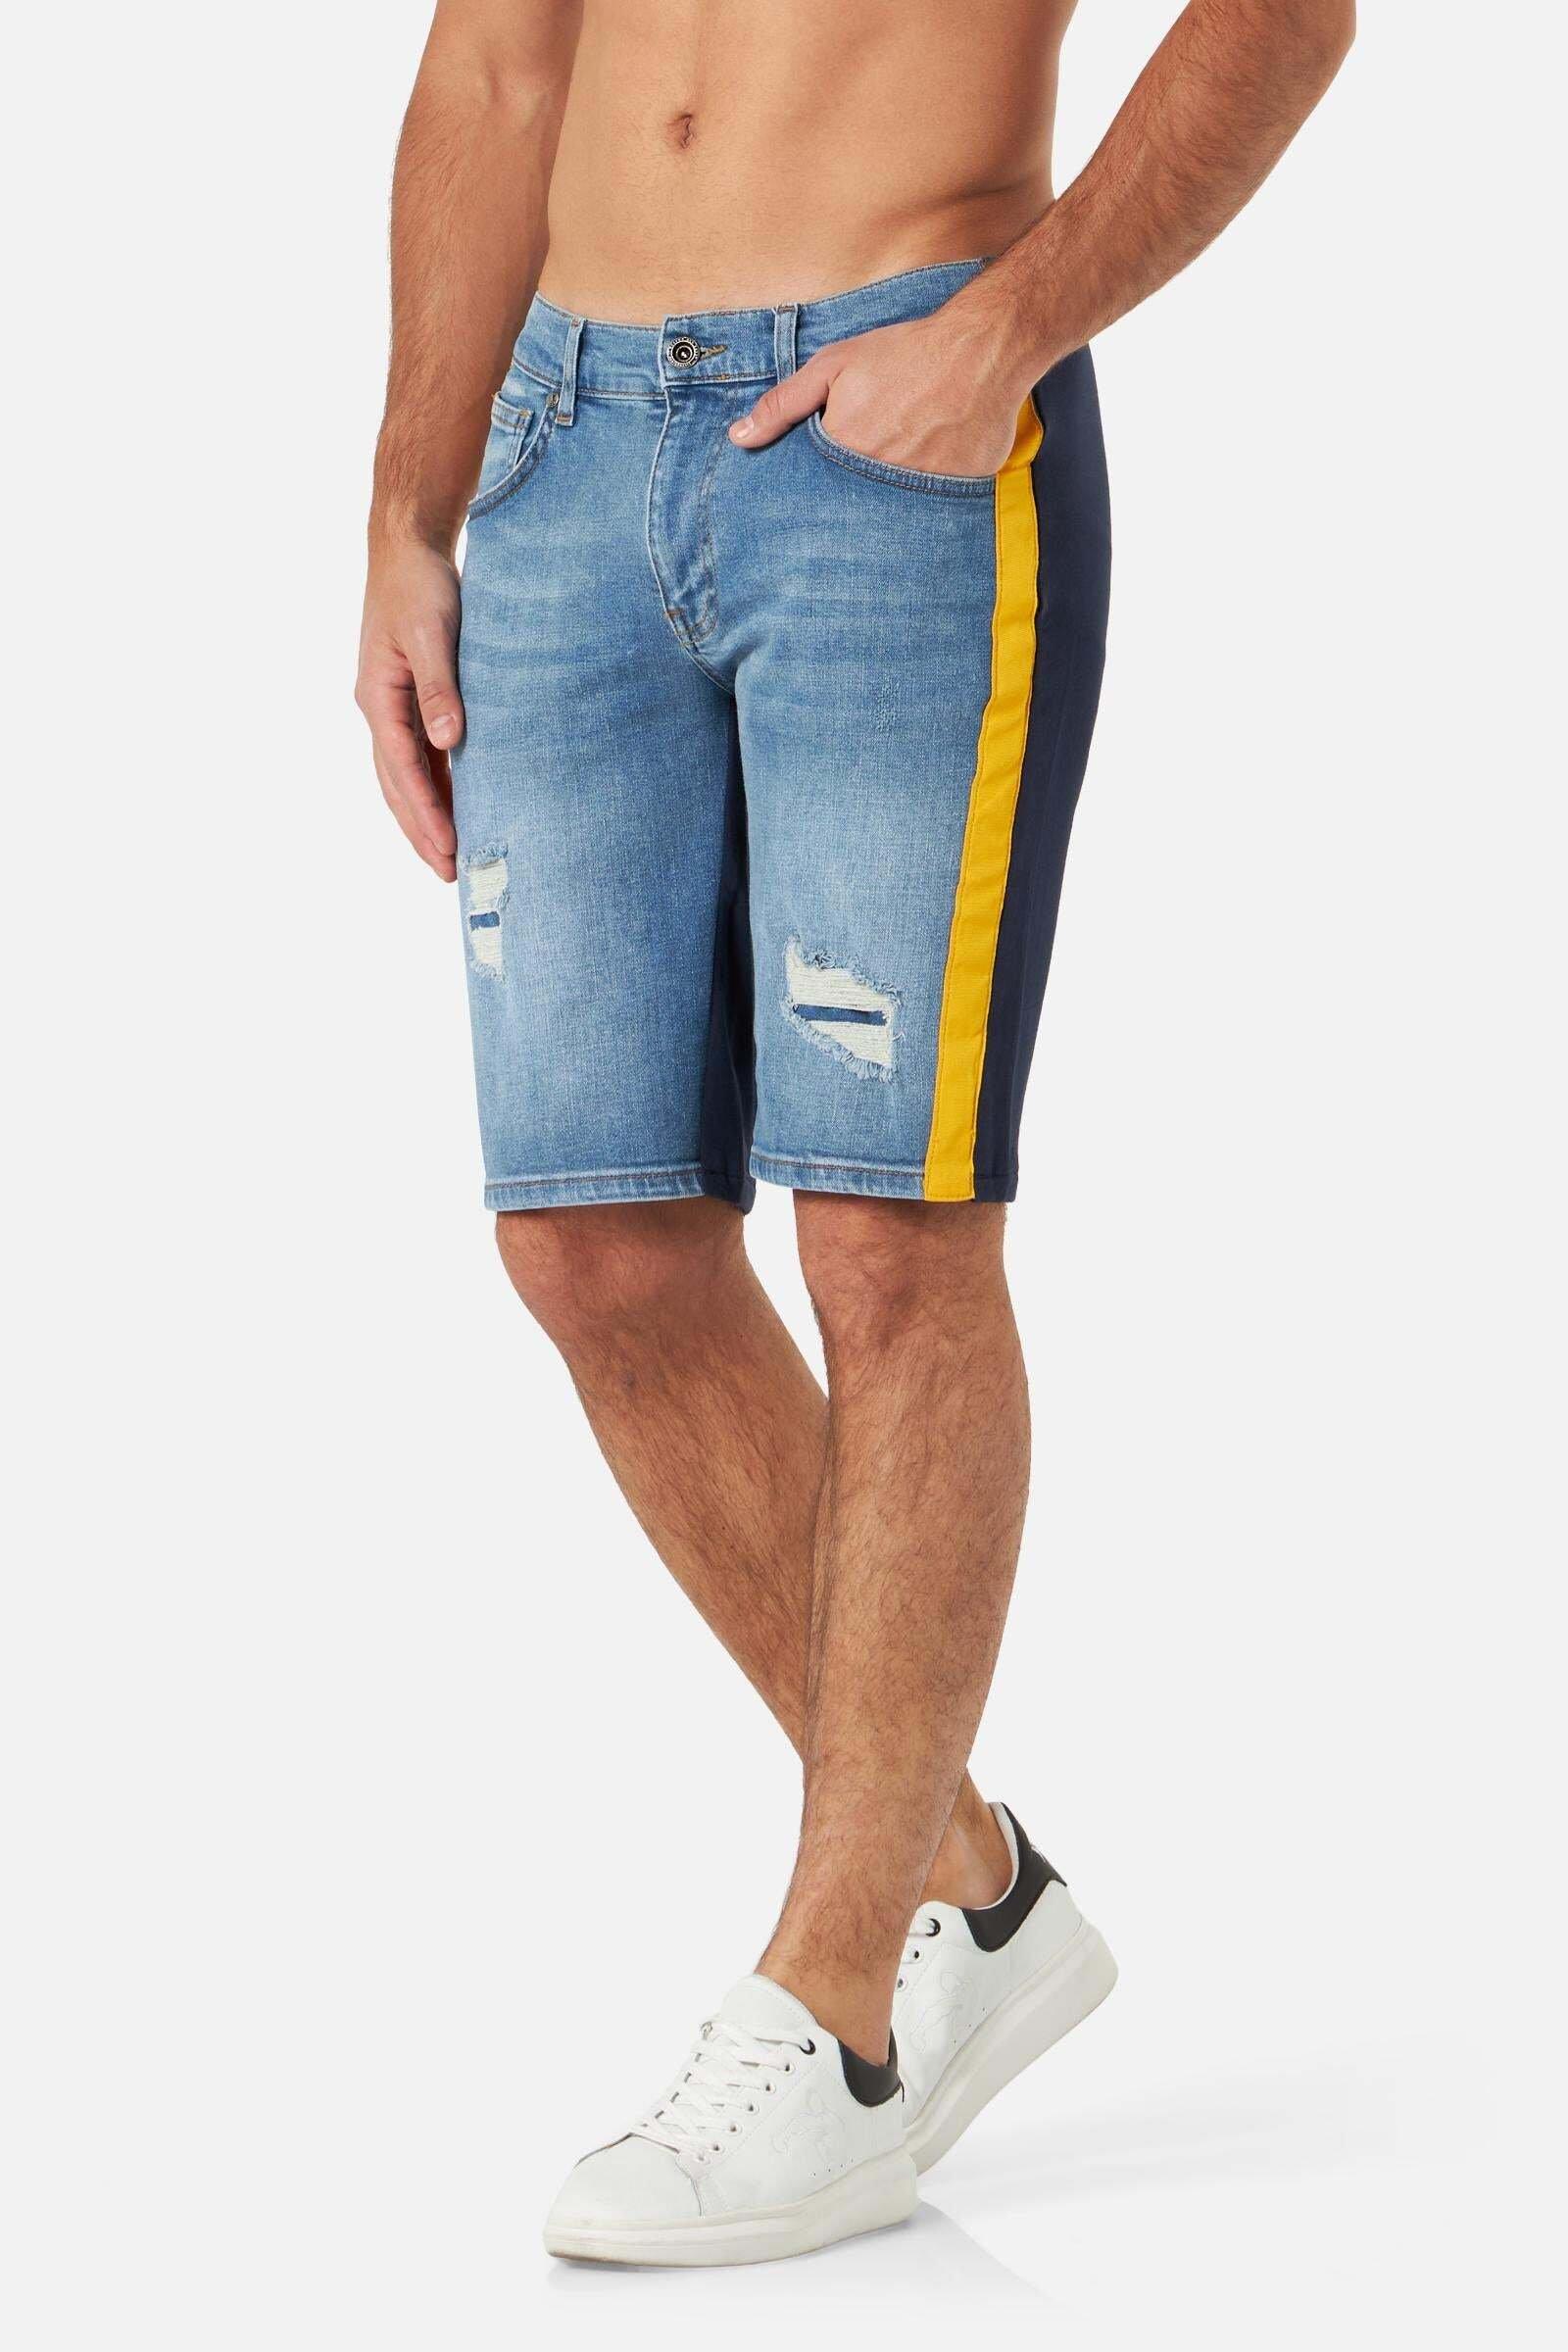 Jeanshorts Mixed Fabric Shorts Herren Blau XL von BOXEUR DES RUES